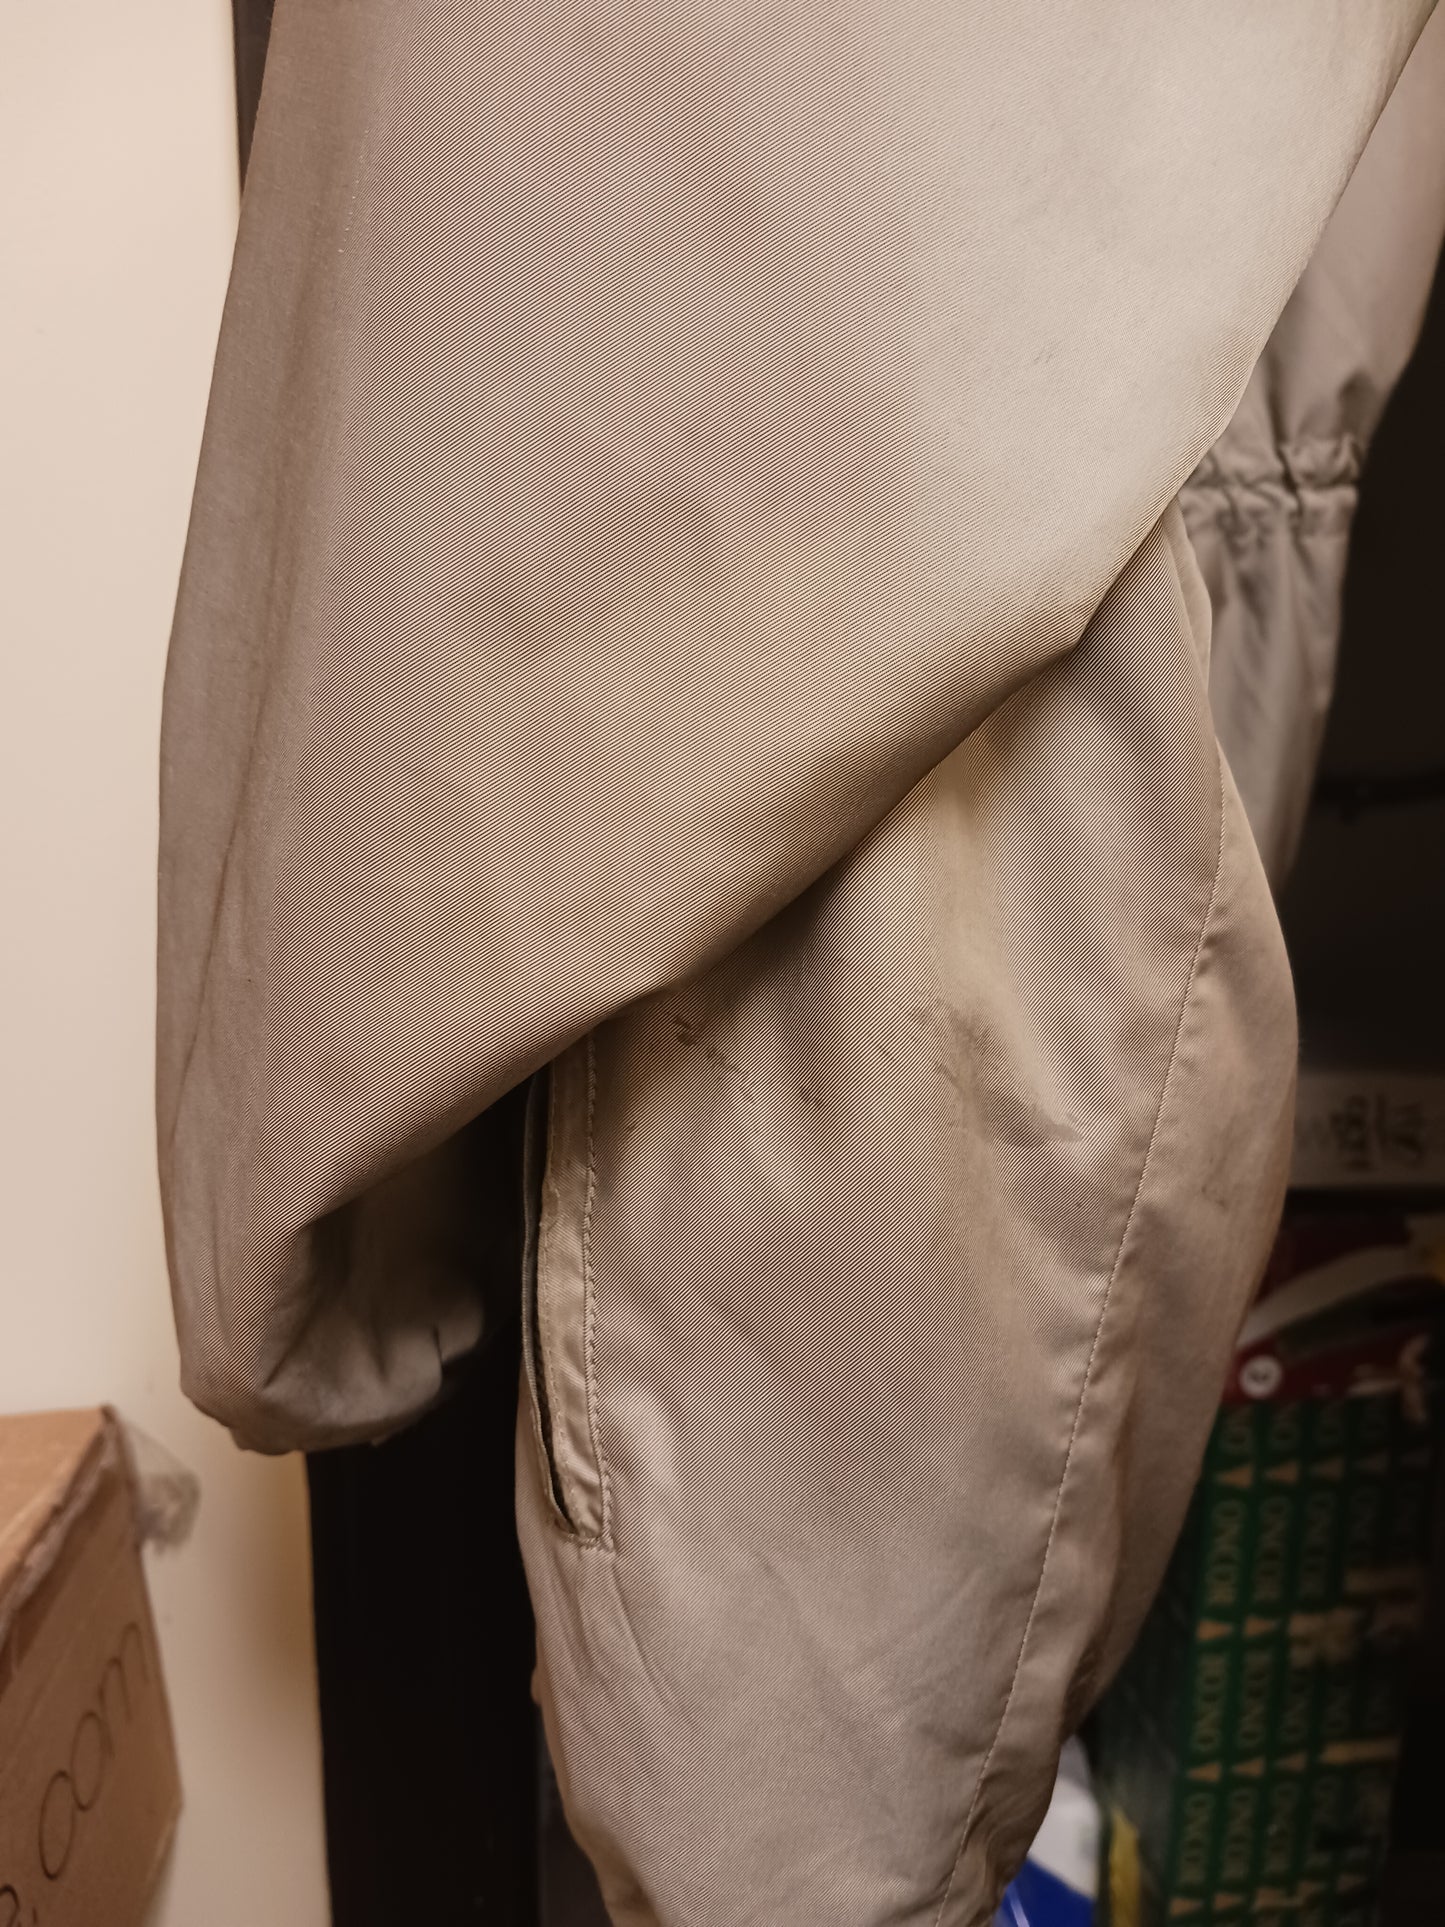 Burberry Jacket With Detachable Fur Trimmed Hood, Size Medium